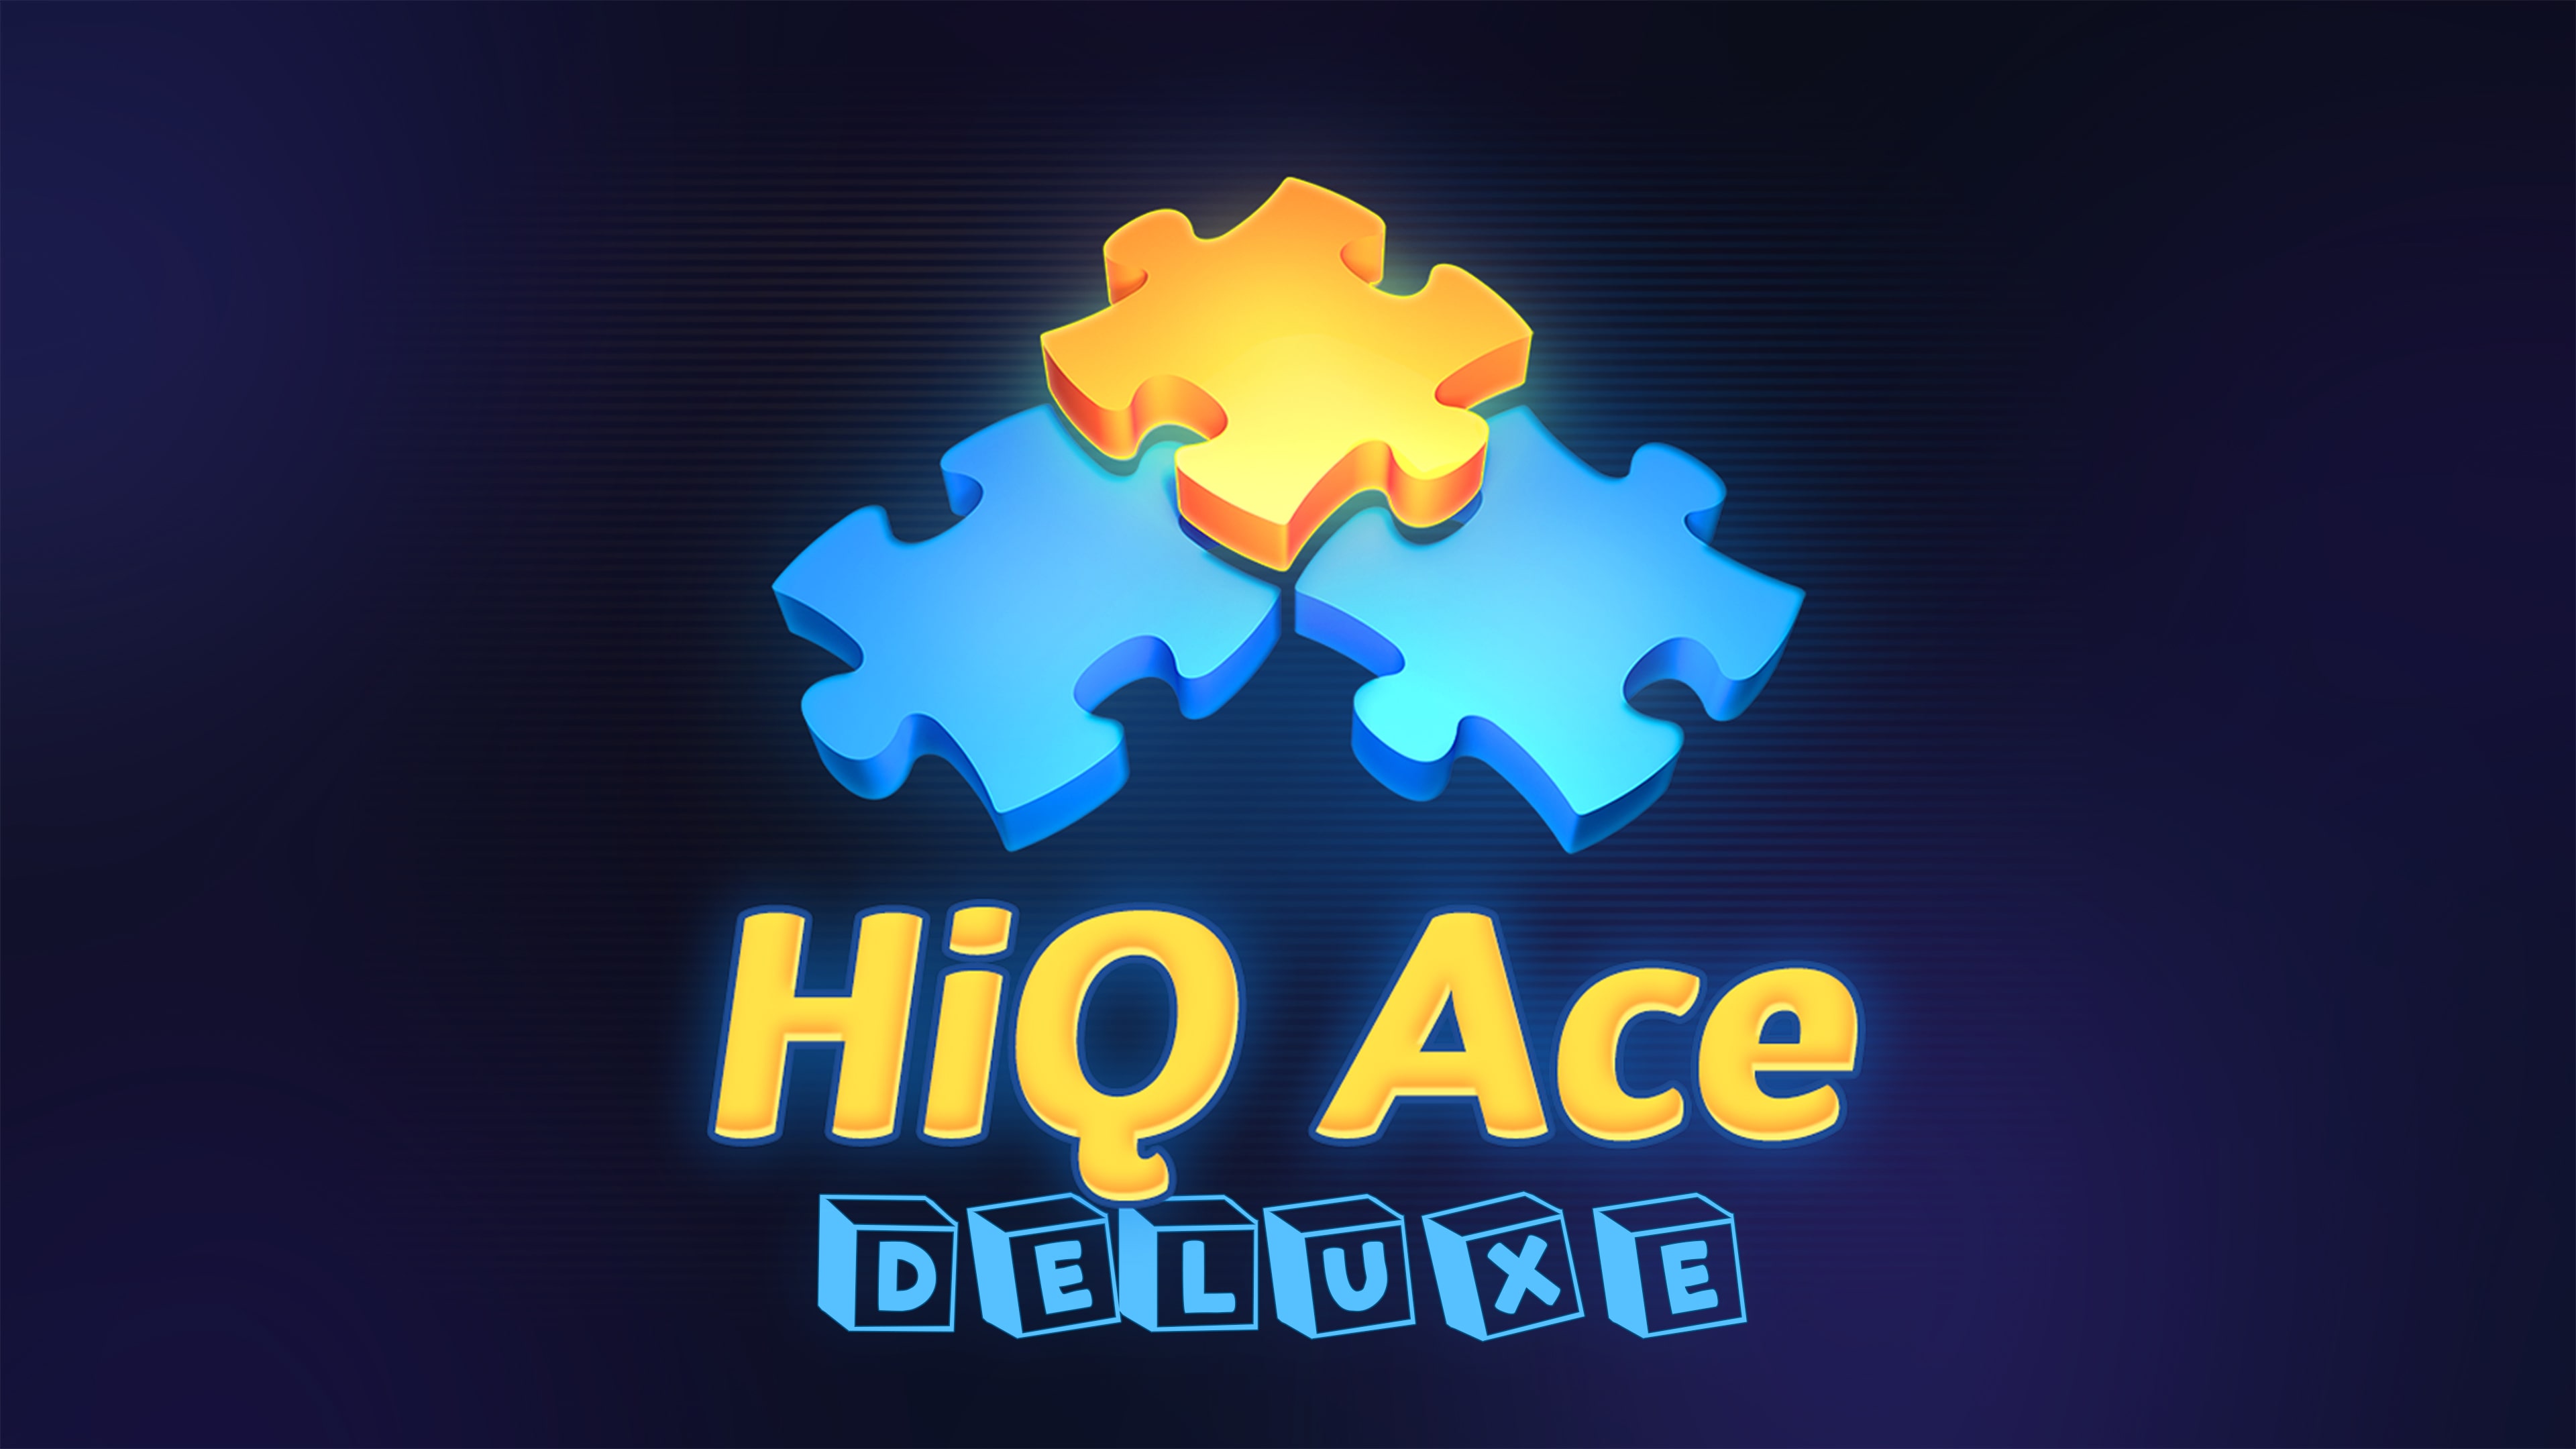 HiQ Ace Deluxe